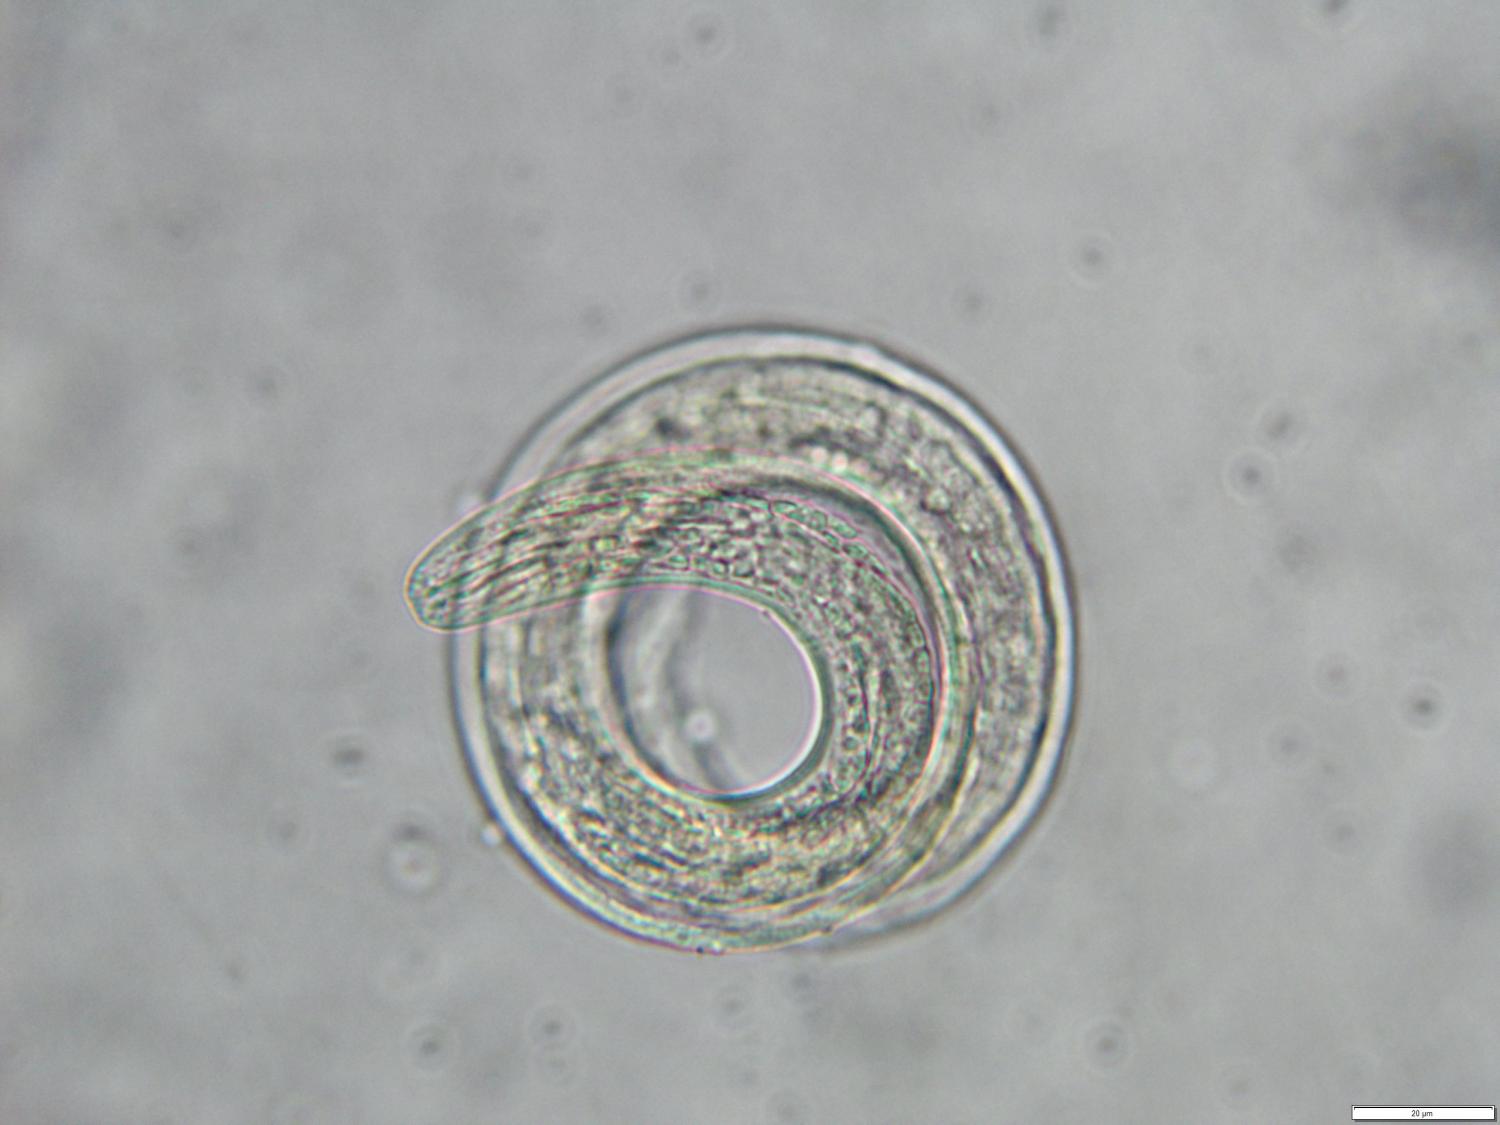 schistosomiasis florida a cernagilis tünetei gyermekeknél